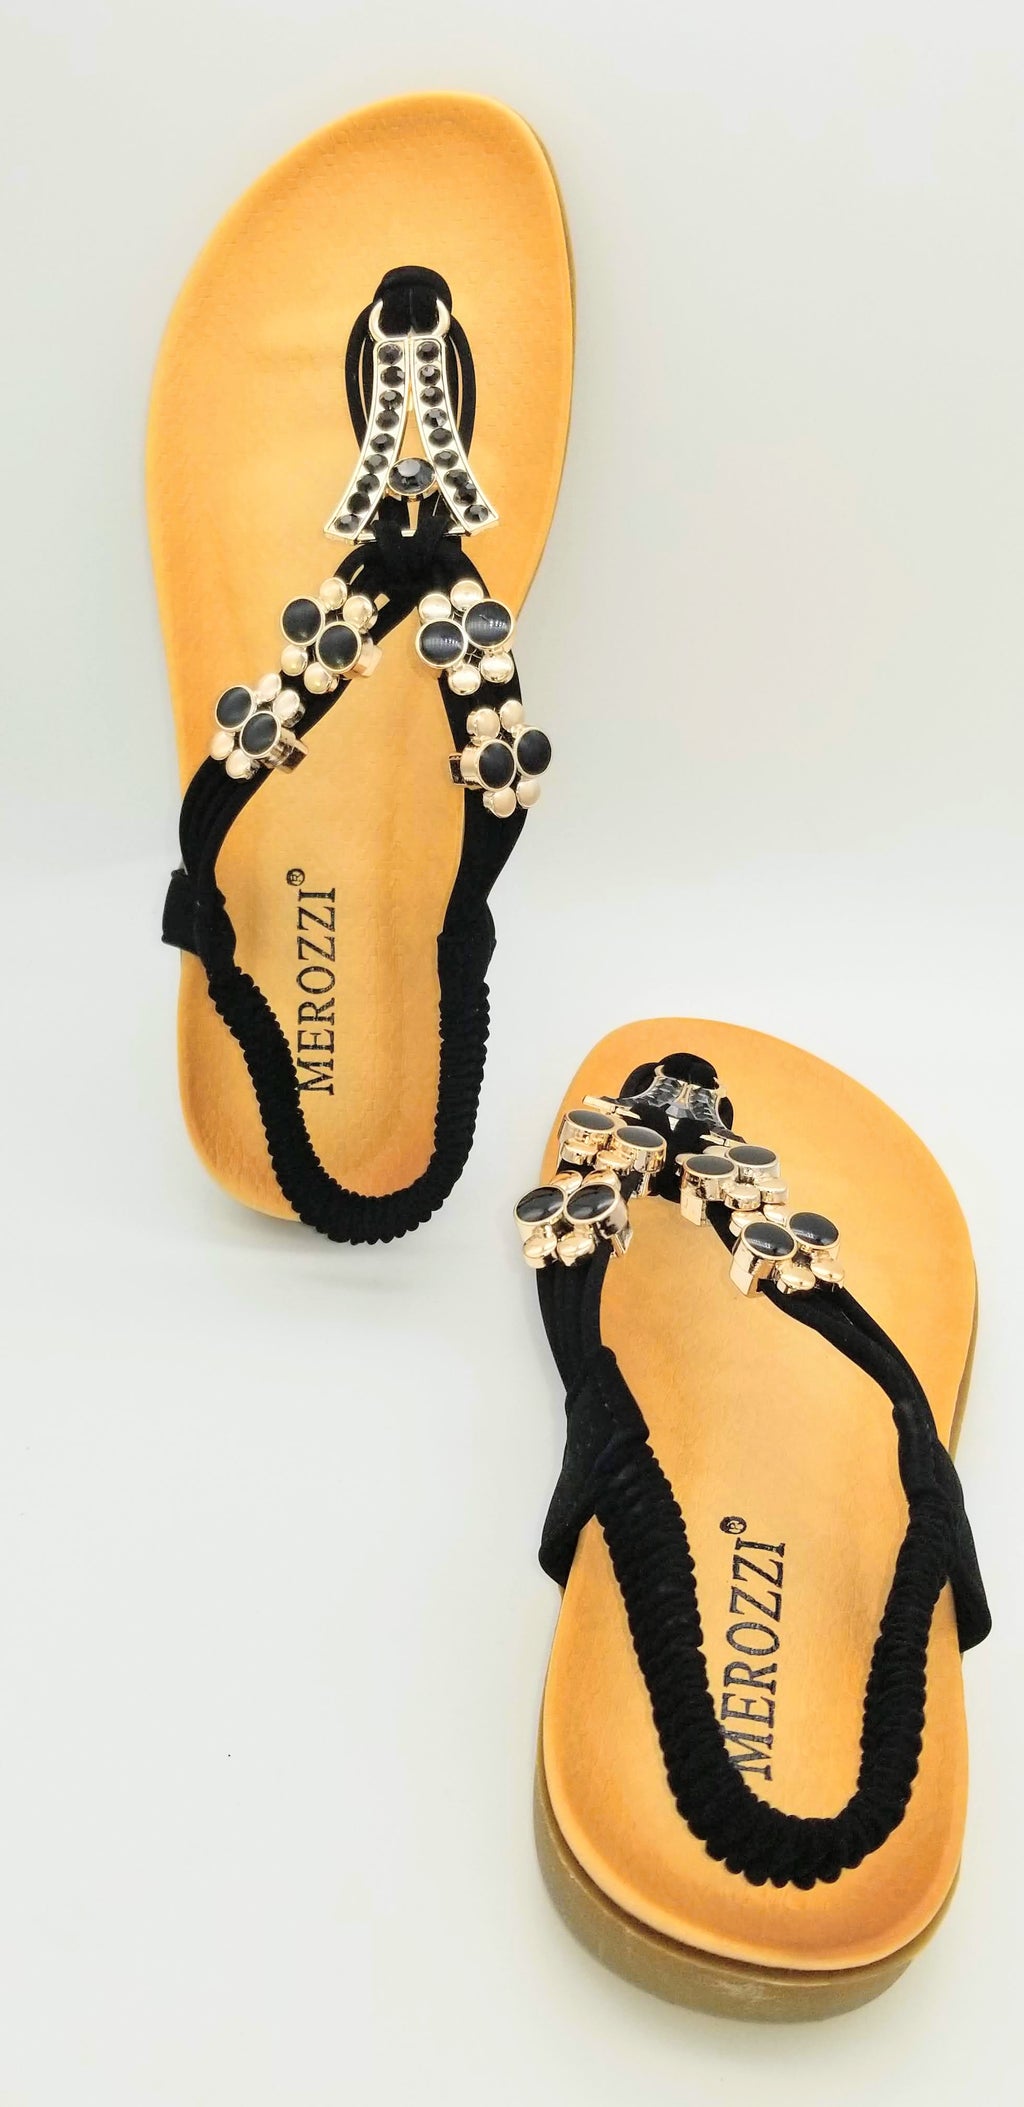 Merozzi, W8805, Black Sandals - Amethyst Shoes